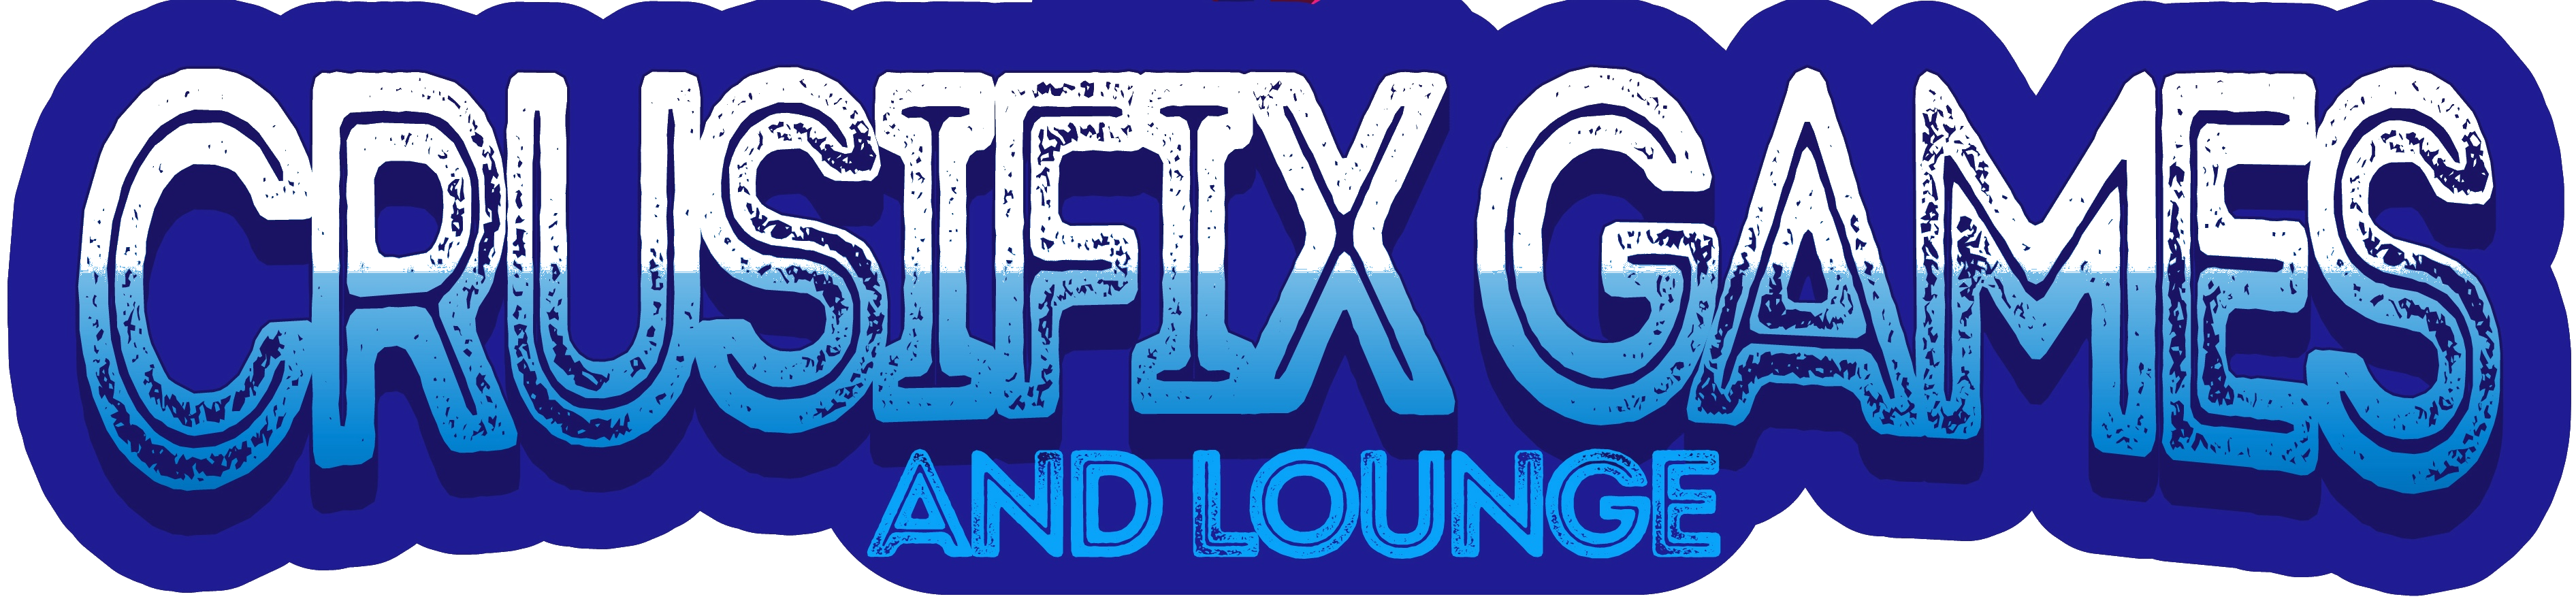 Crusifix Games and Lounge